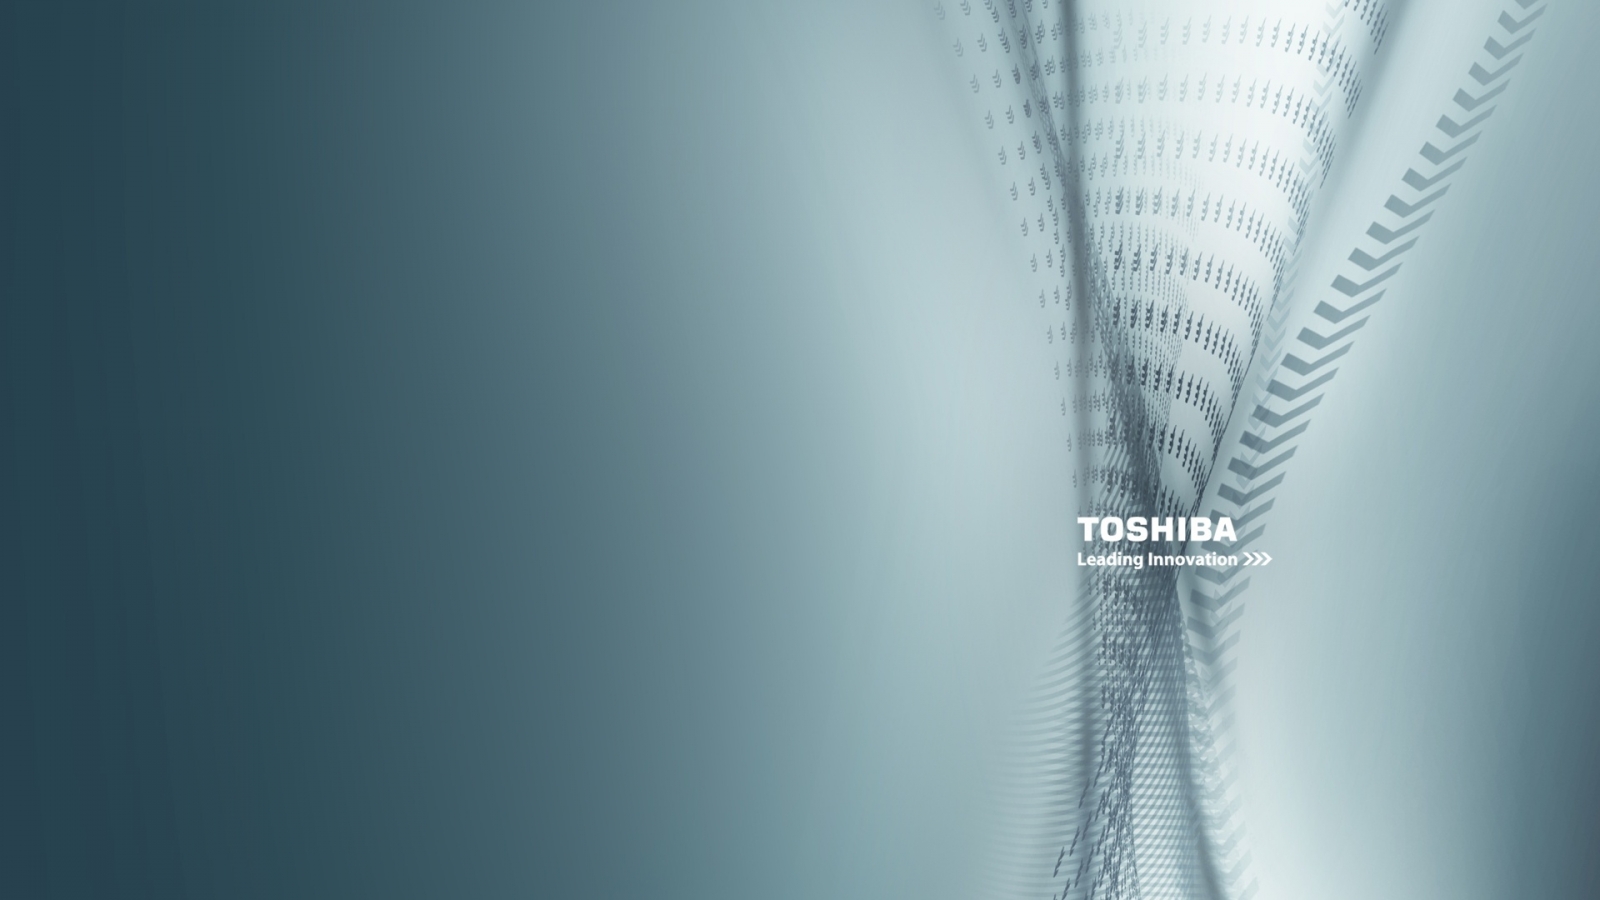 Toshiba Innovation for 1600 x 900 HDTV resolution